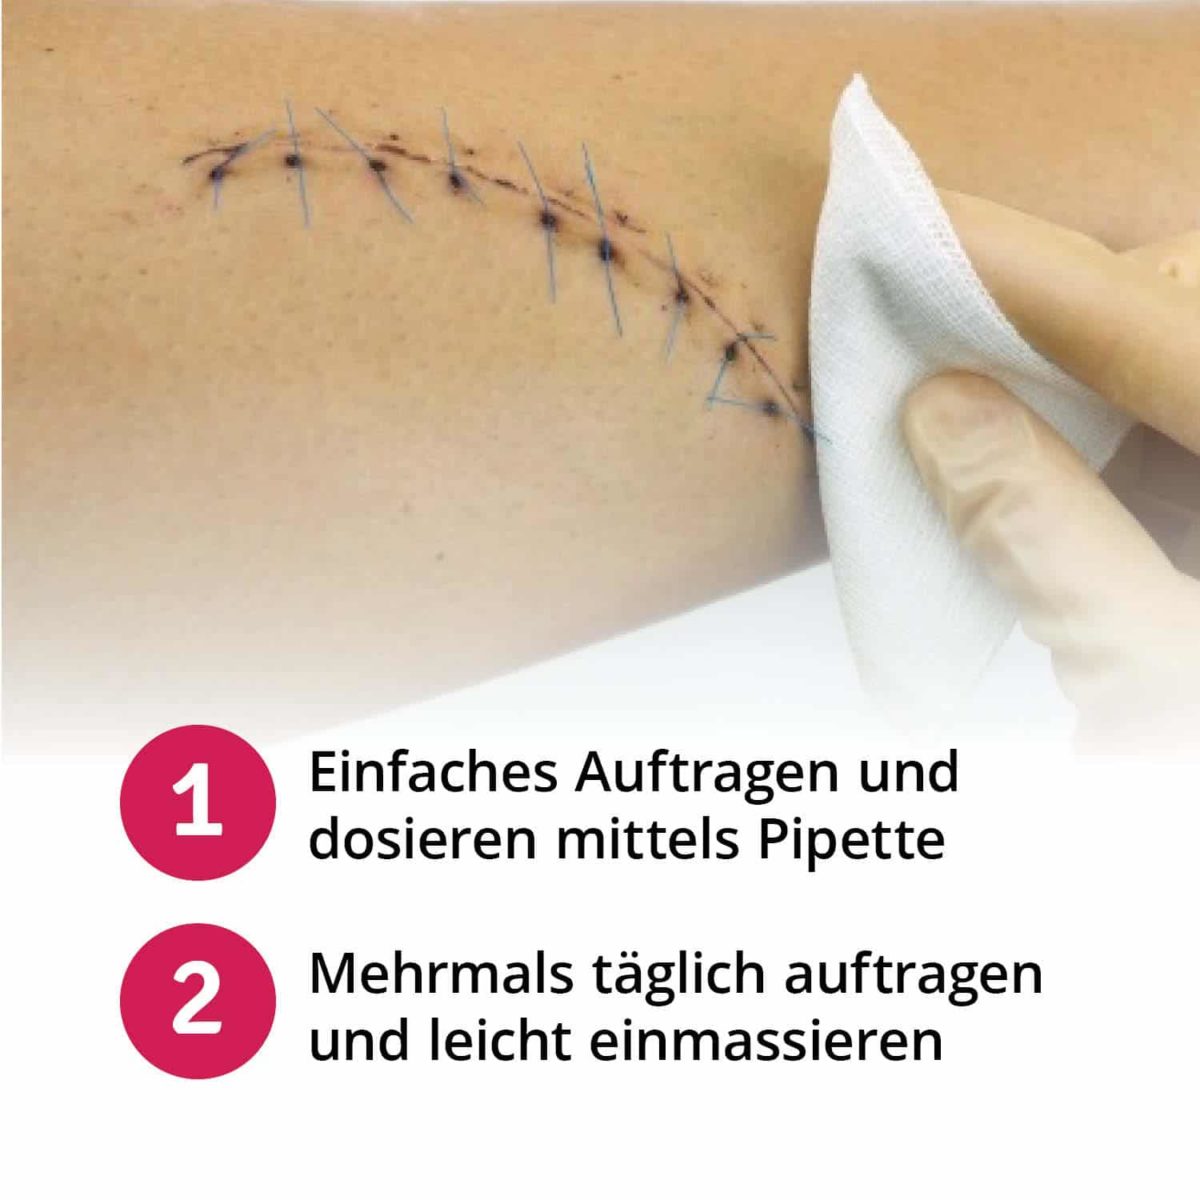 Casida Scar Care Oil Repair & Protect – 20 ml 10086758 PZN pharmacy prevent stretch marks scars naturally